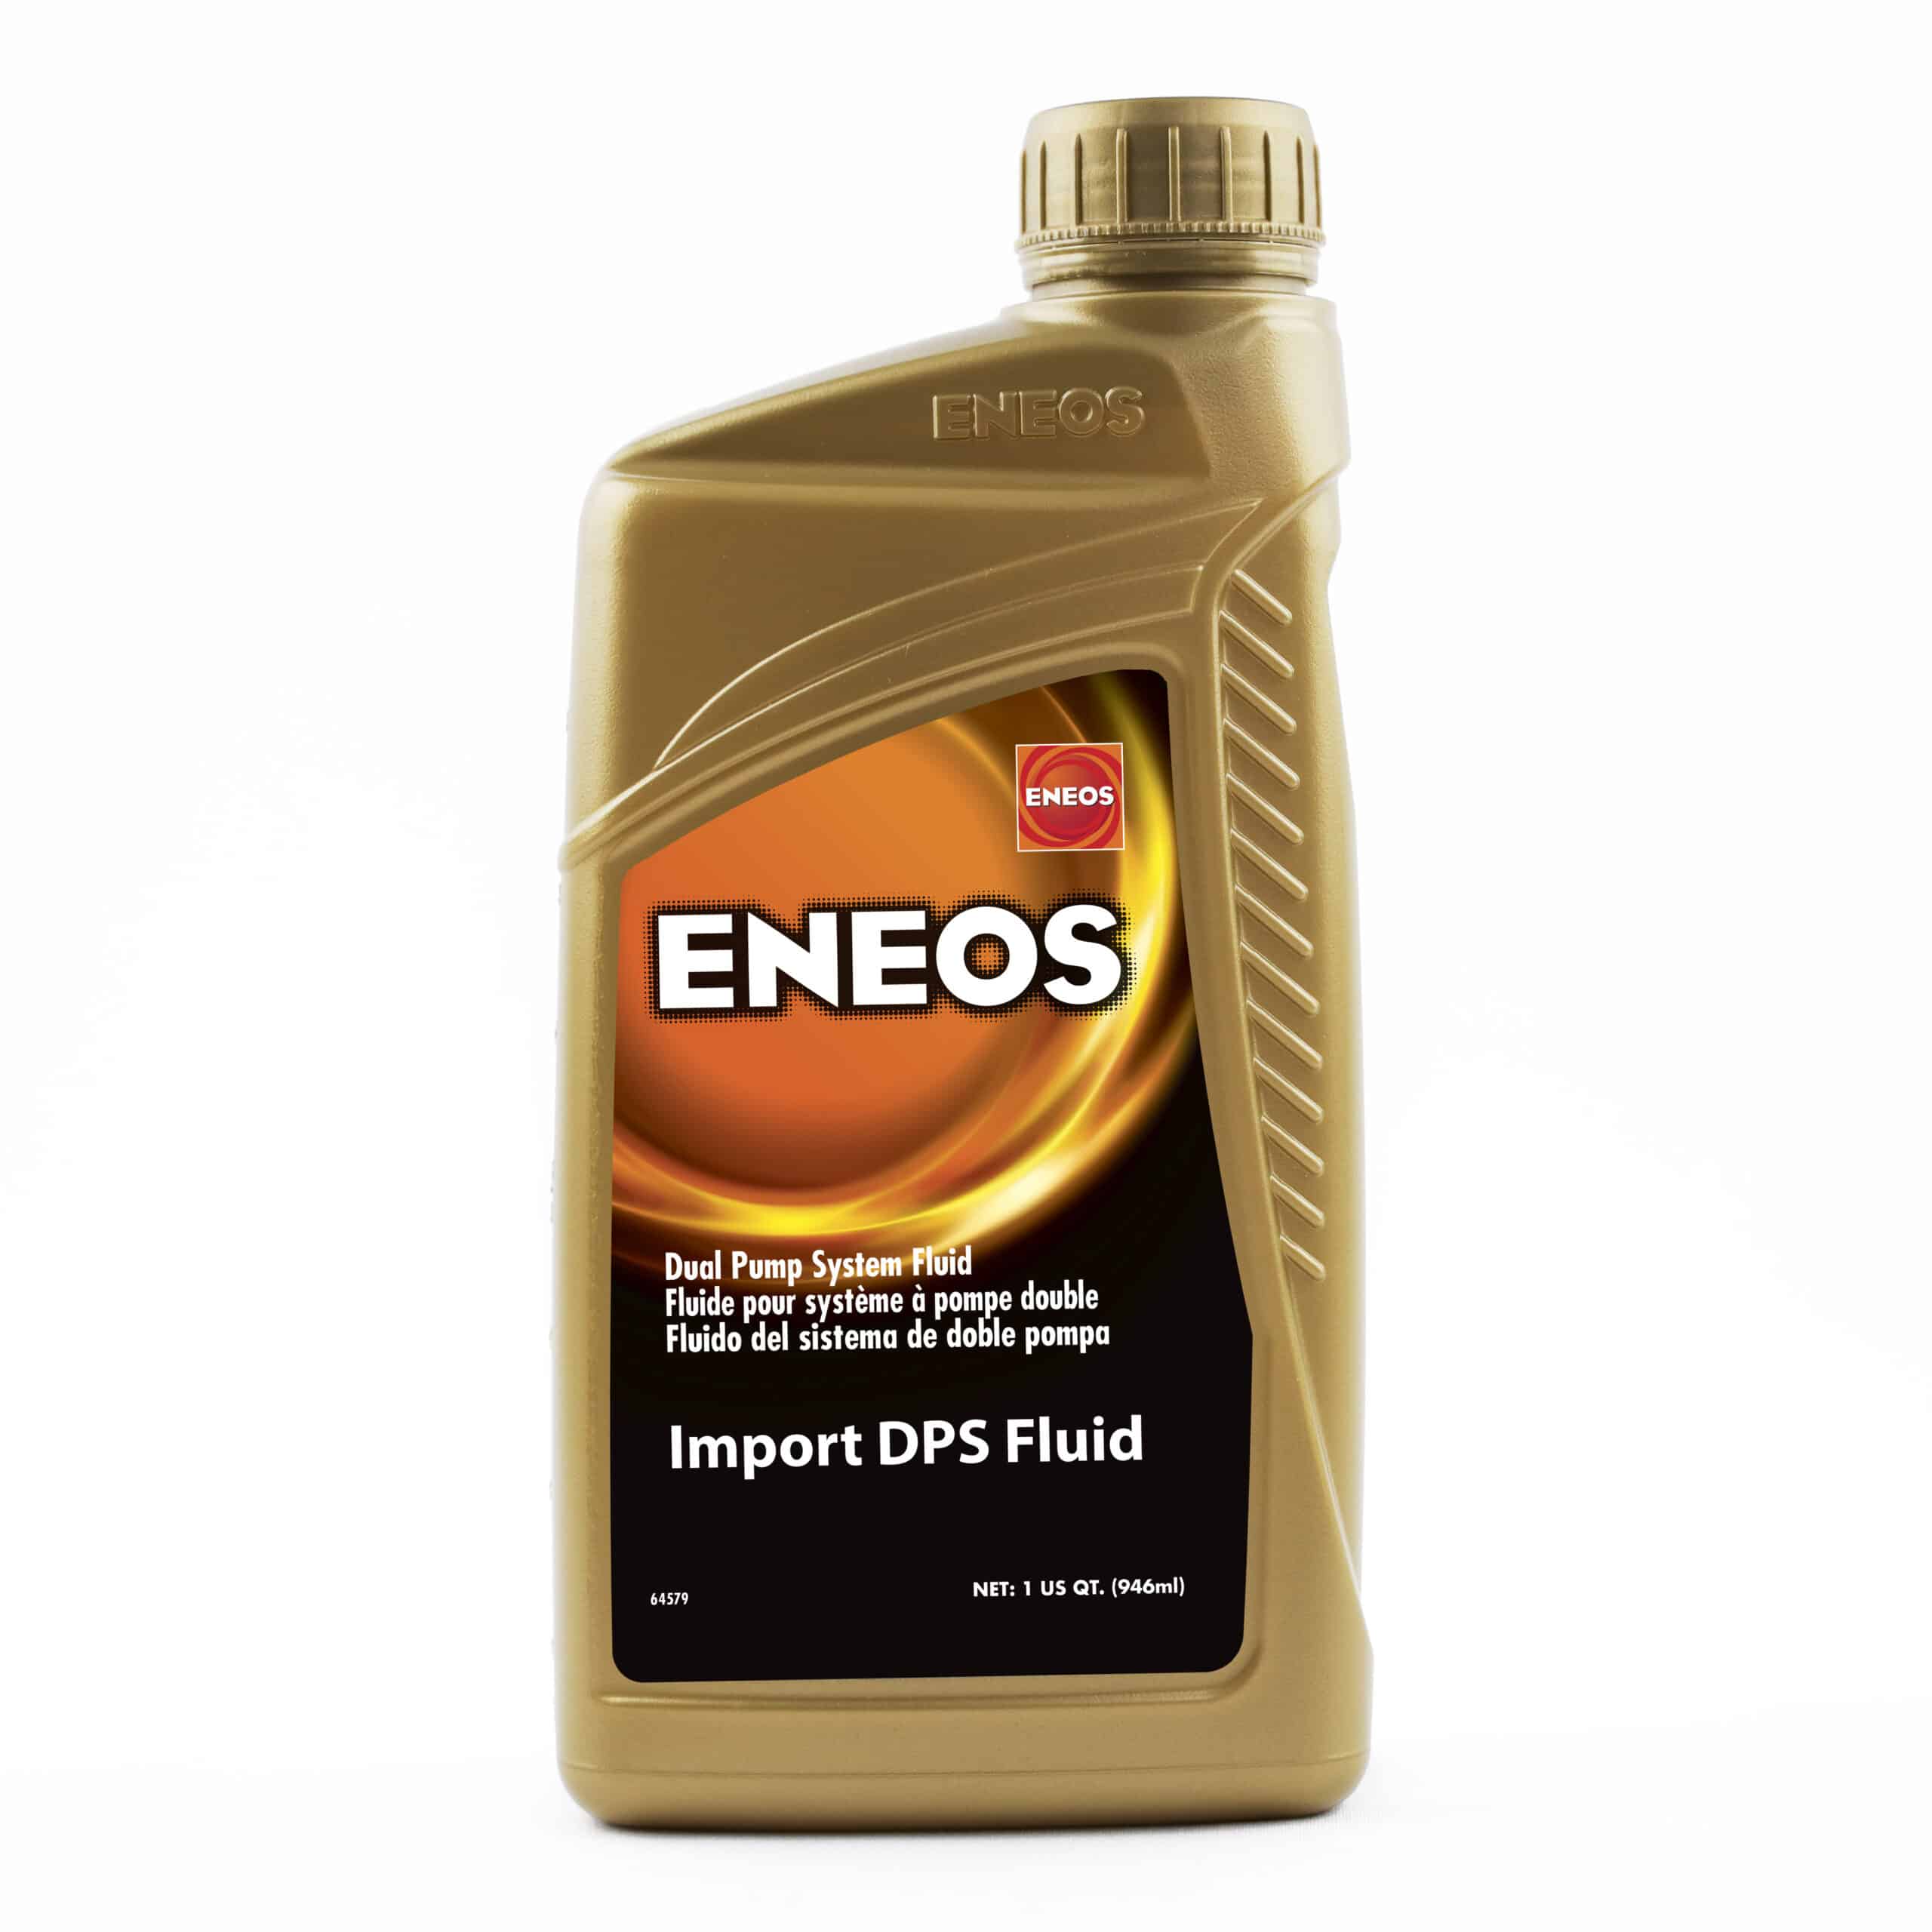 ENEOS IMPORT DPS FLUID FRONT